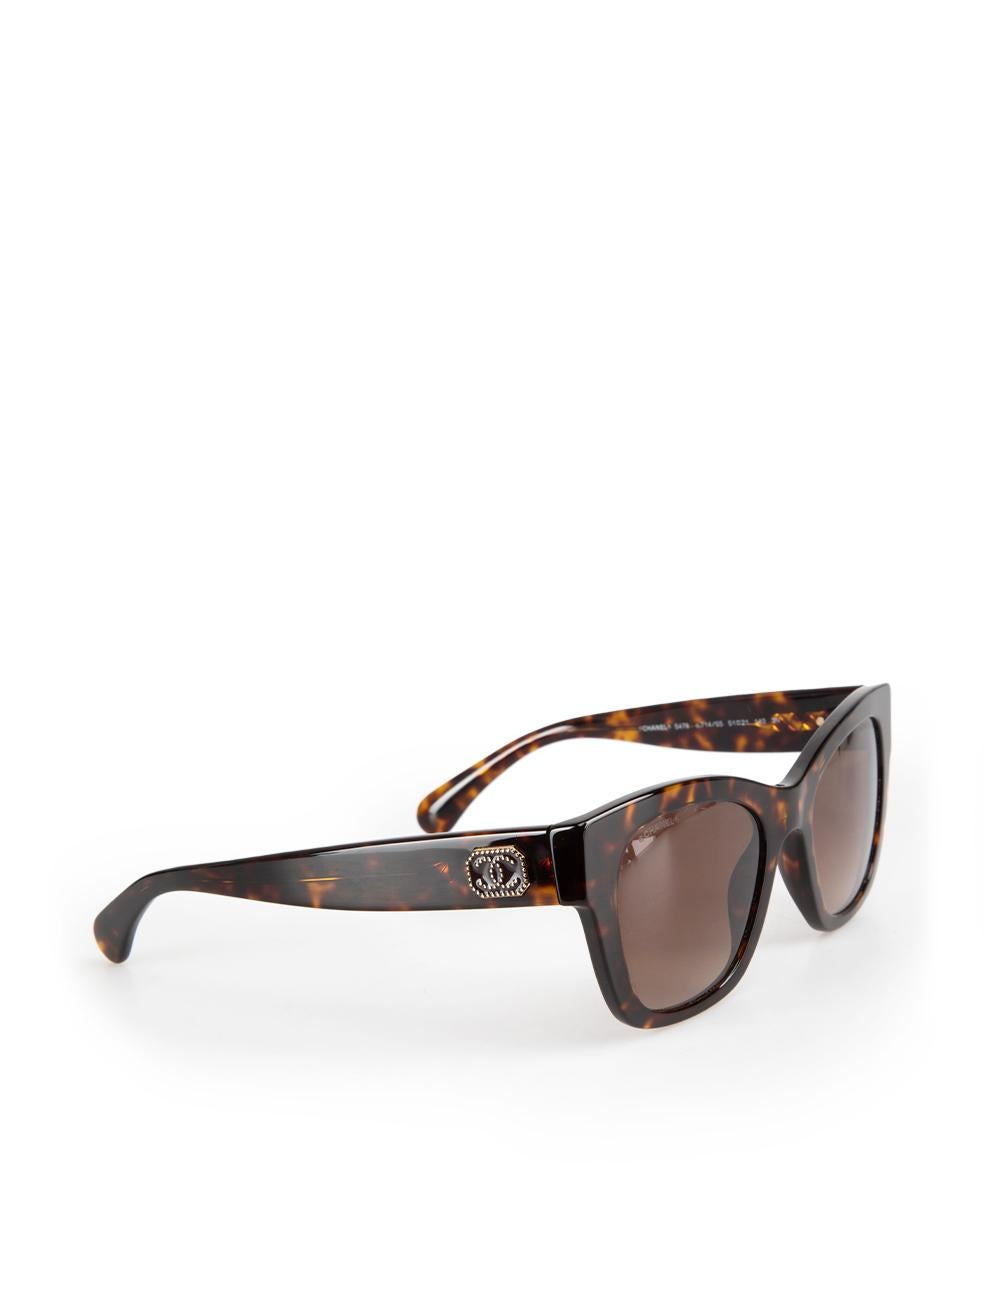 Chanel Dark Tortoise Square Sunglasses In New Condition For Sale In London, GB